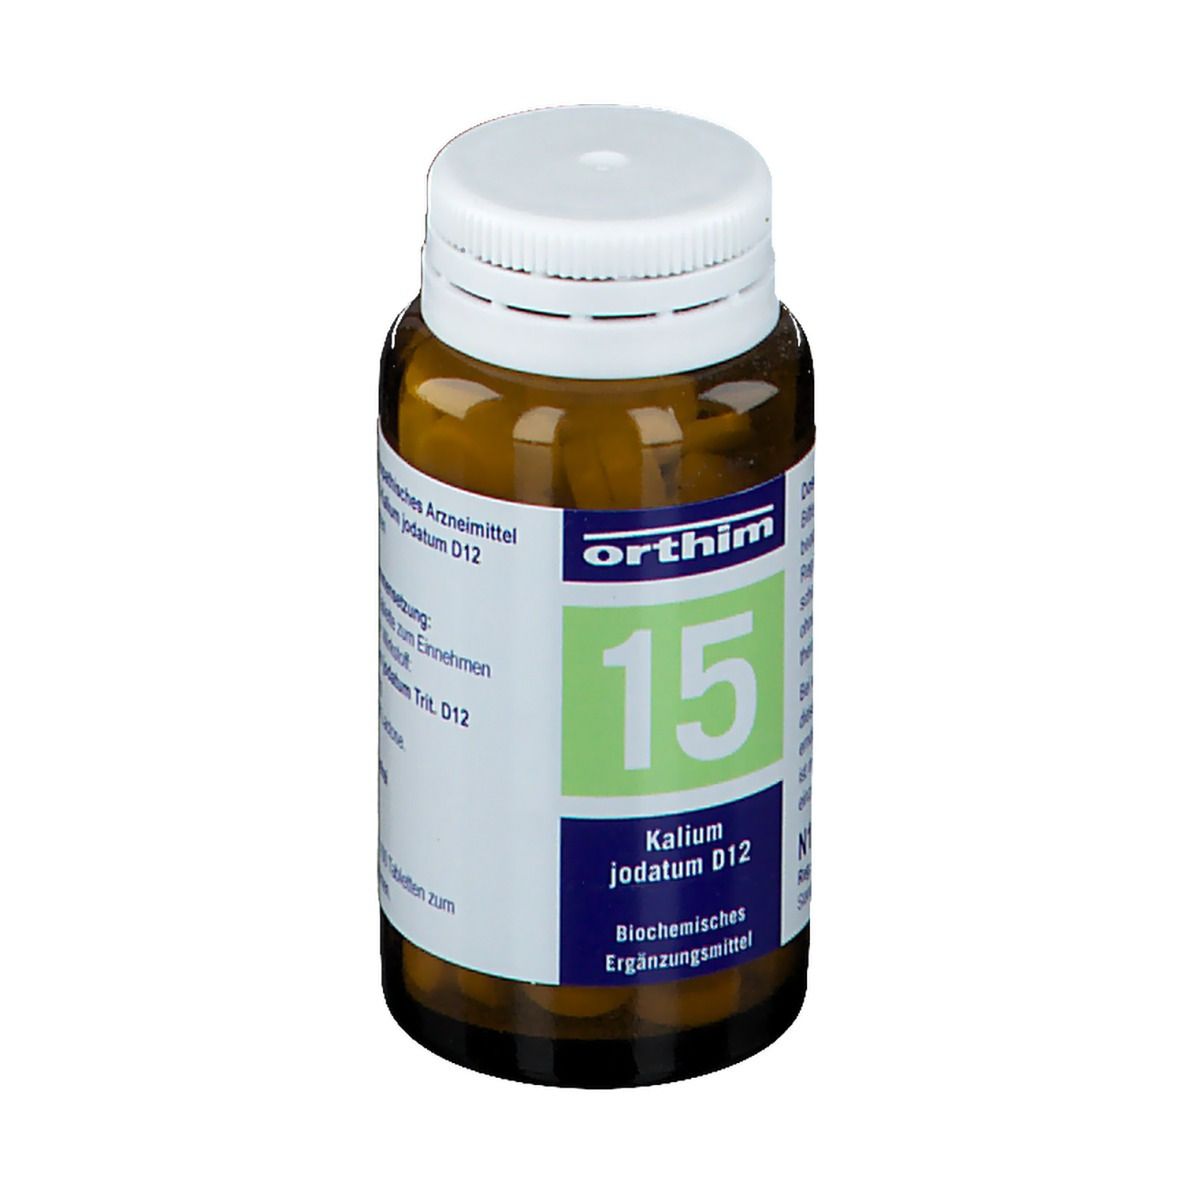 Biochemie orthim® Nr. 15 Kalium jodatum D12